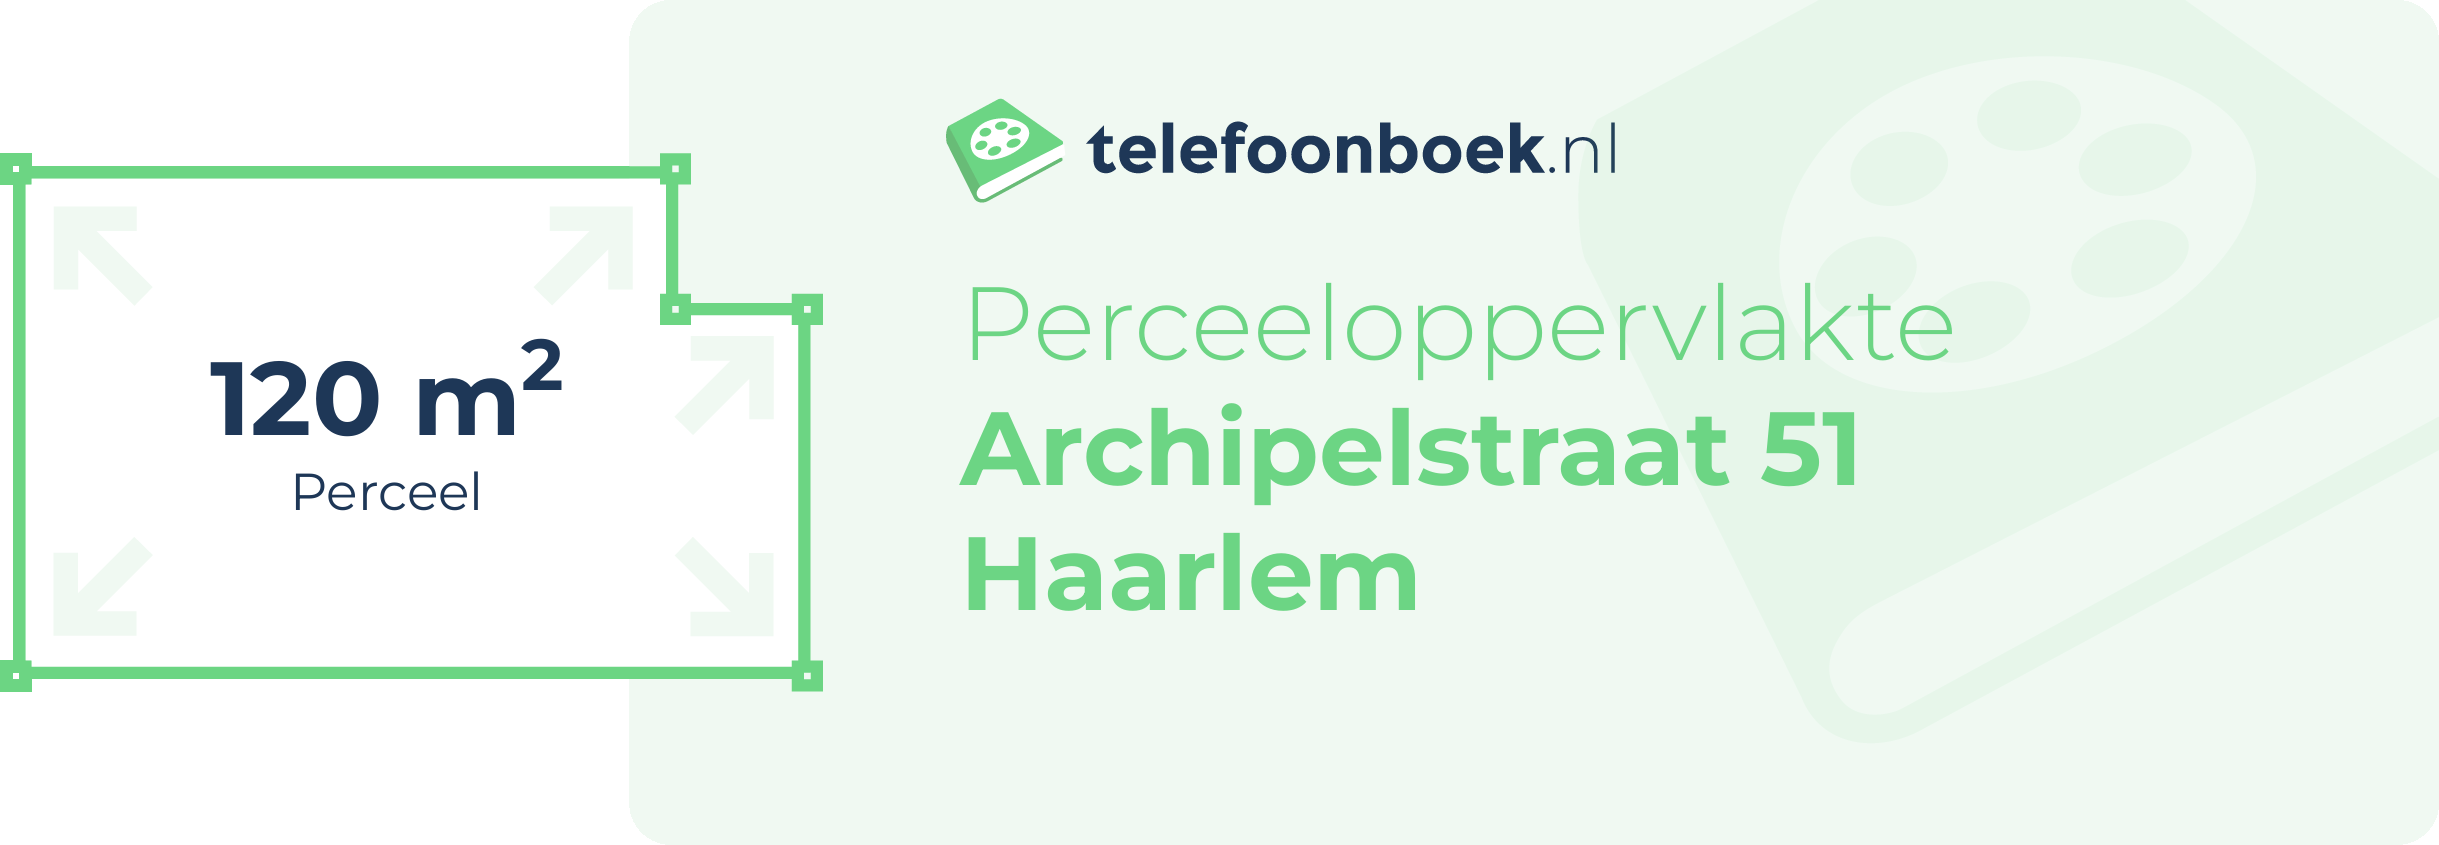 Perceeloppervlakte Archipelstraat 51 Haarlem